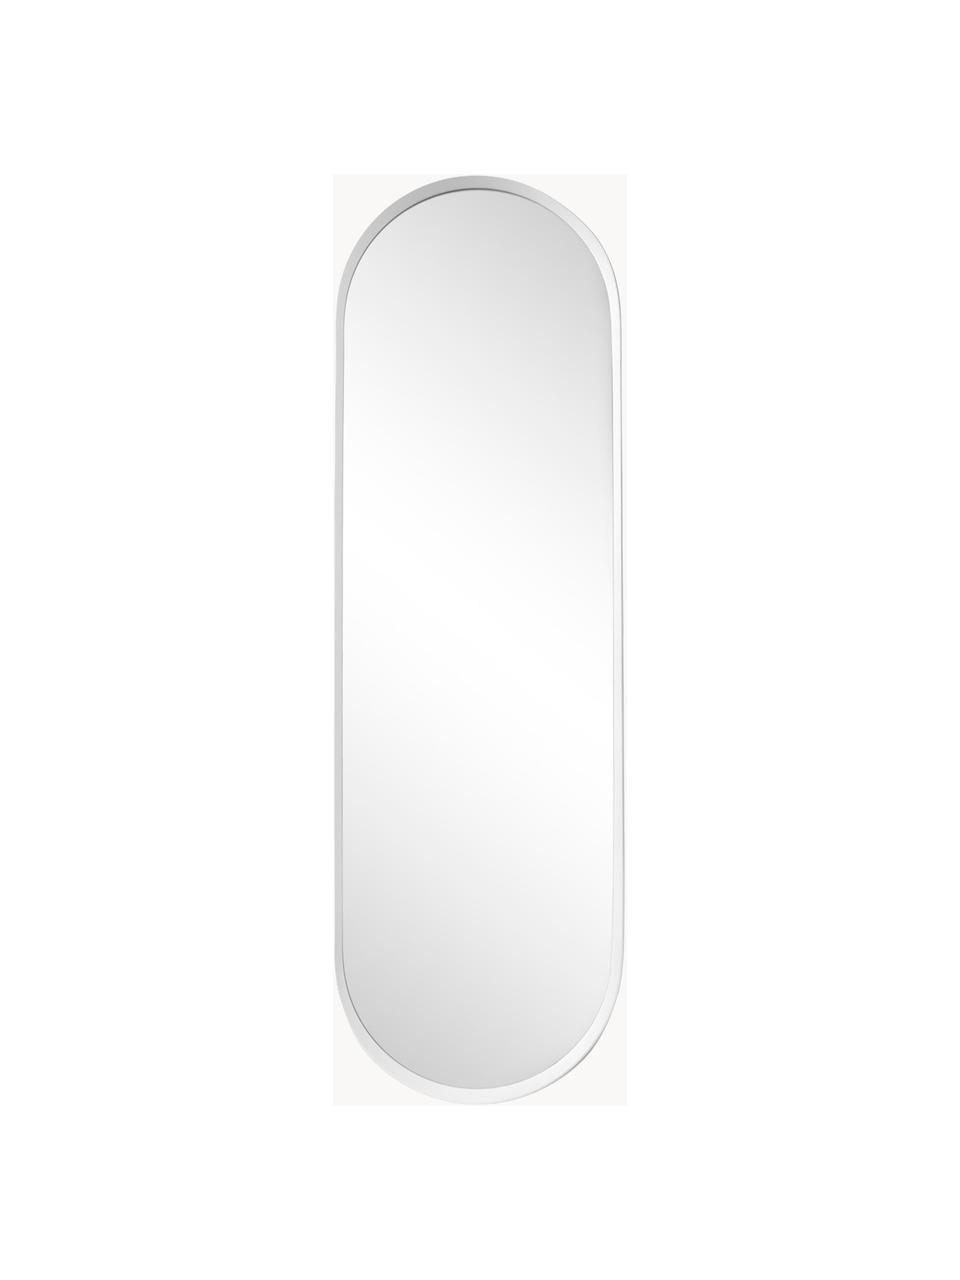 Ovaler Wandspiegel Norm, Rahmen: Aluminium, pulverbeschich, Spiegelfläche: Spiegelglas, Weiss, B 40 x H 130 cm